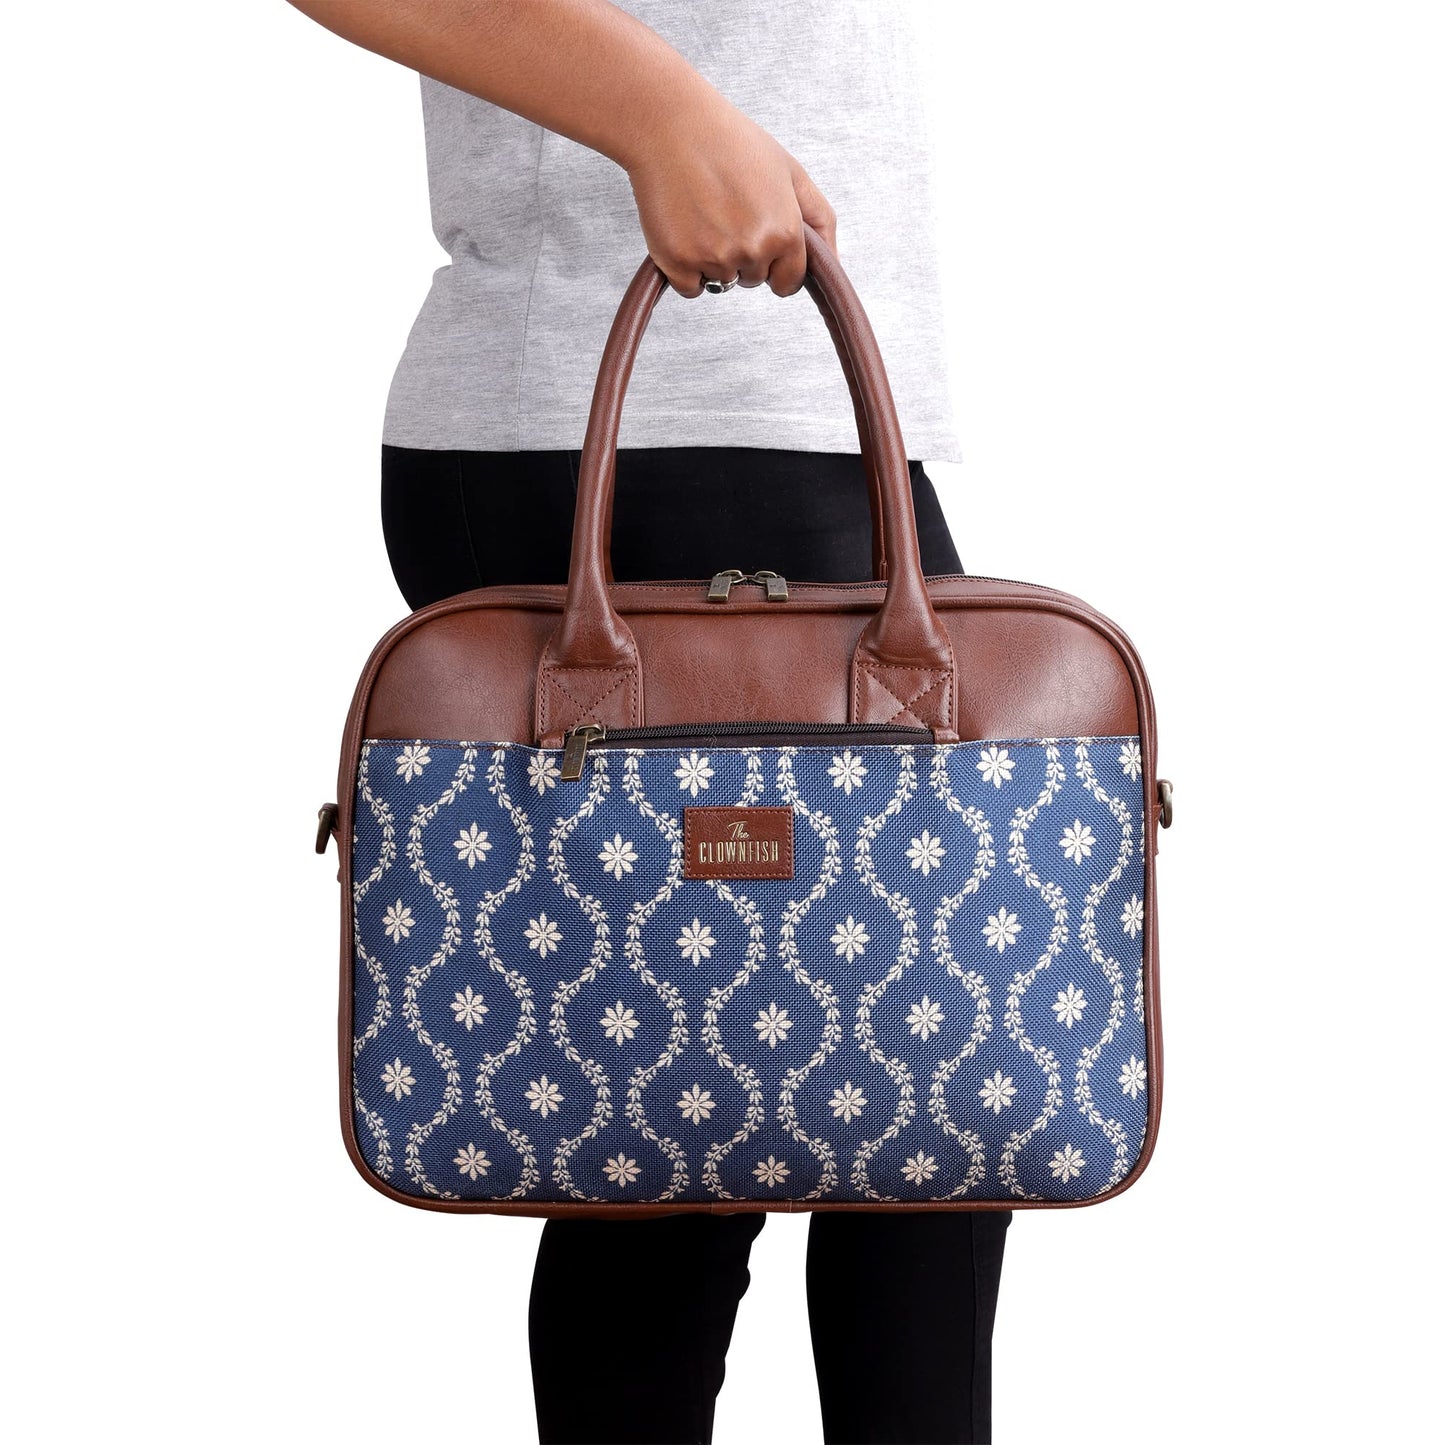 THE CLOWNFISH Deborah series 15.6 inch Laptop Bag For Women Printed Handicraft Fabric & Faux Leather Office Bag Briefcase Messenger Sling Handbag Business Bag (Royal Blue)